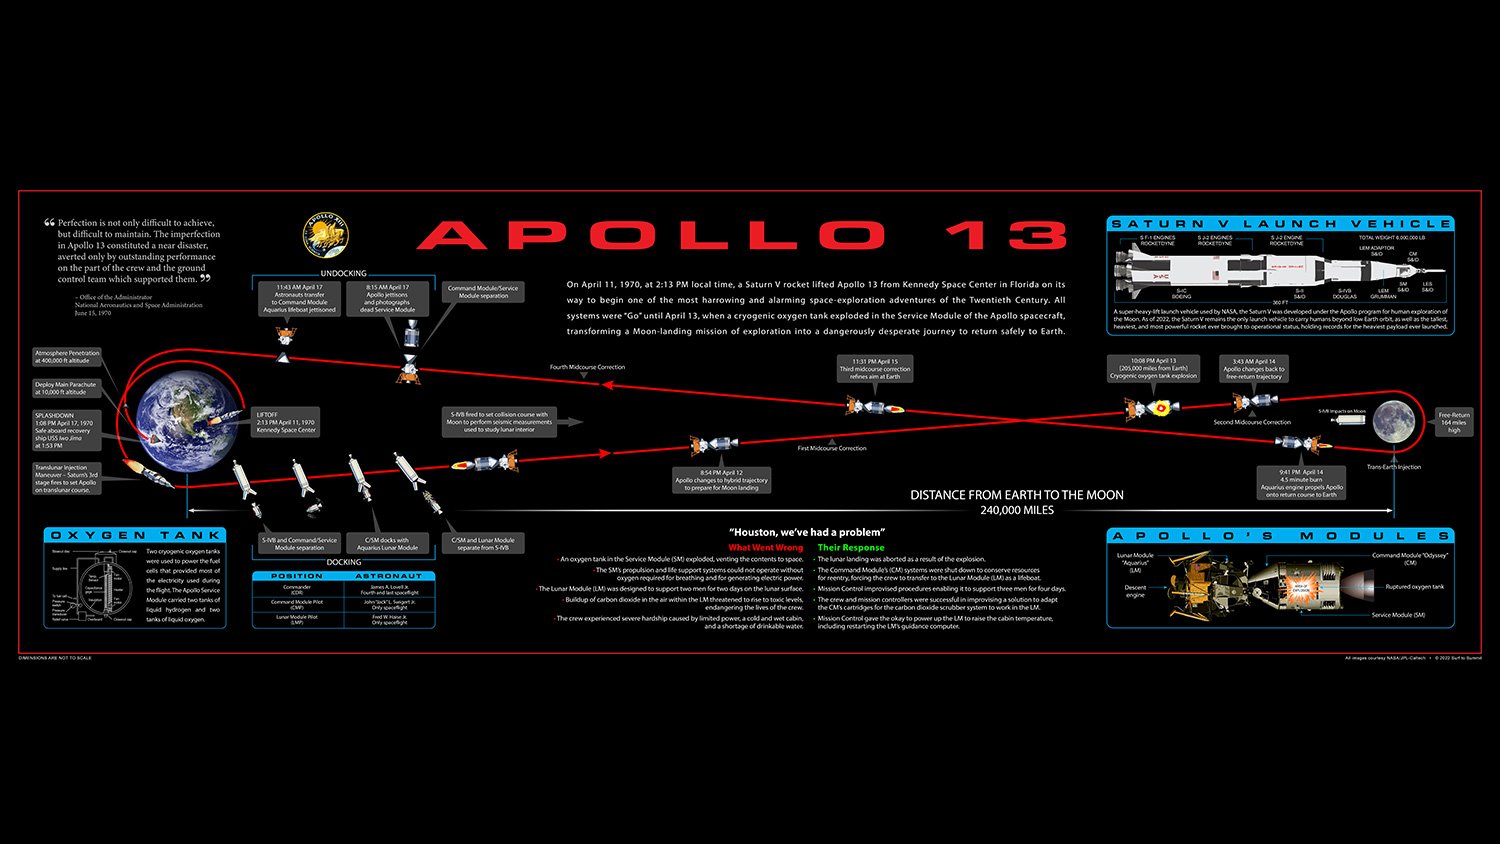 S2S_Apollo13Poster4WebA101922.jpg